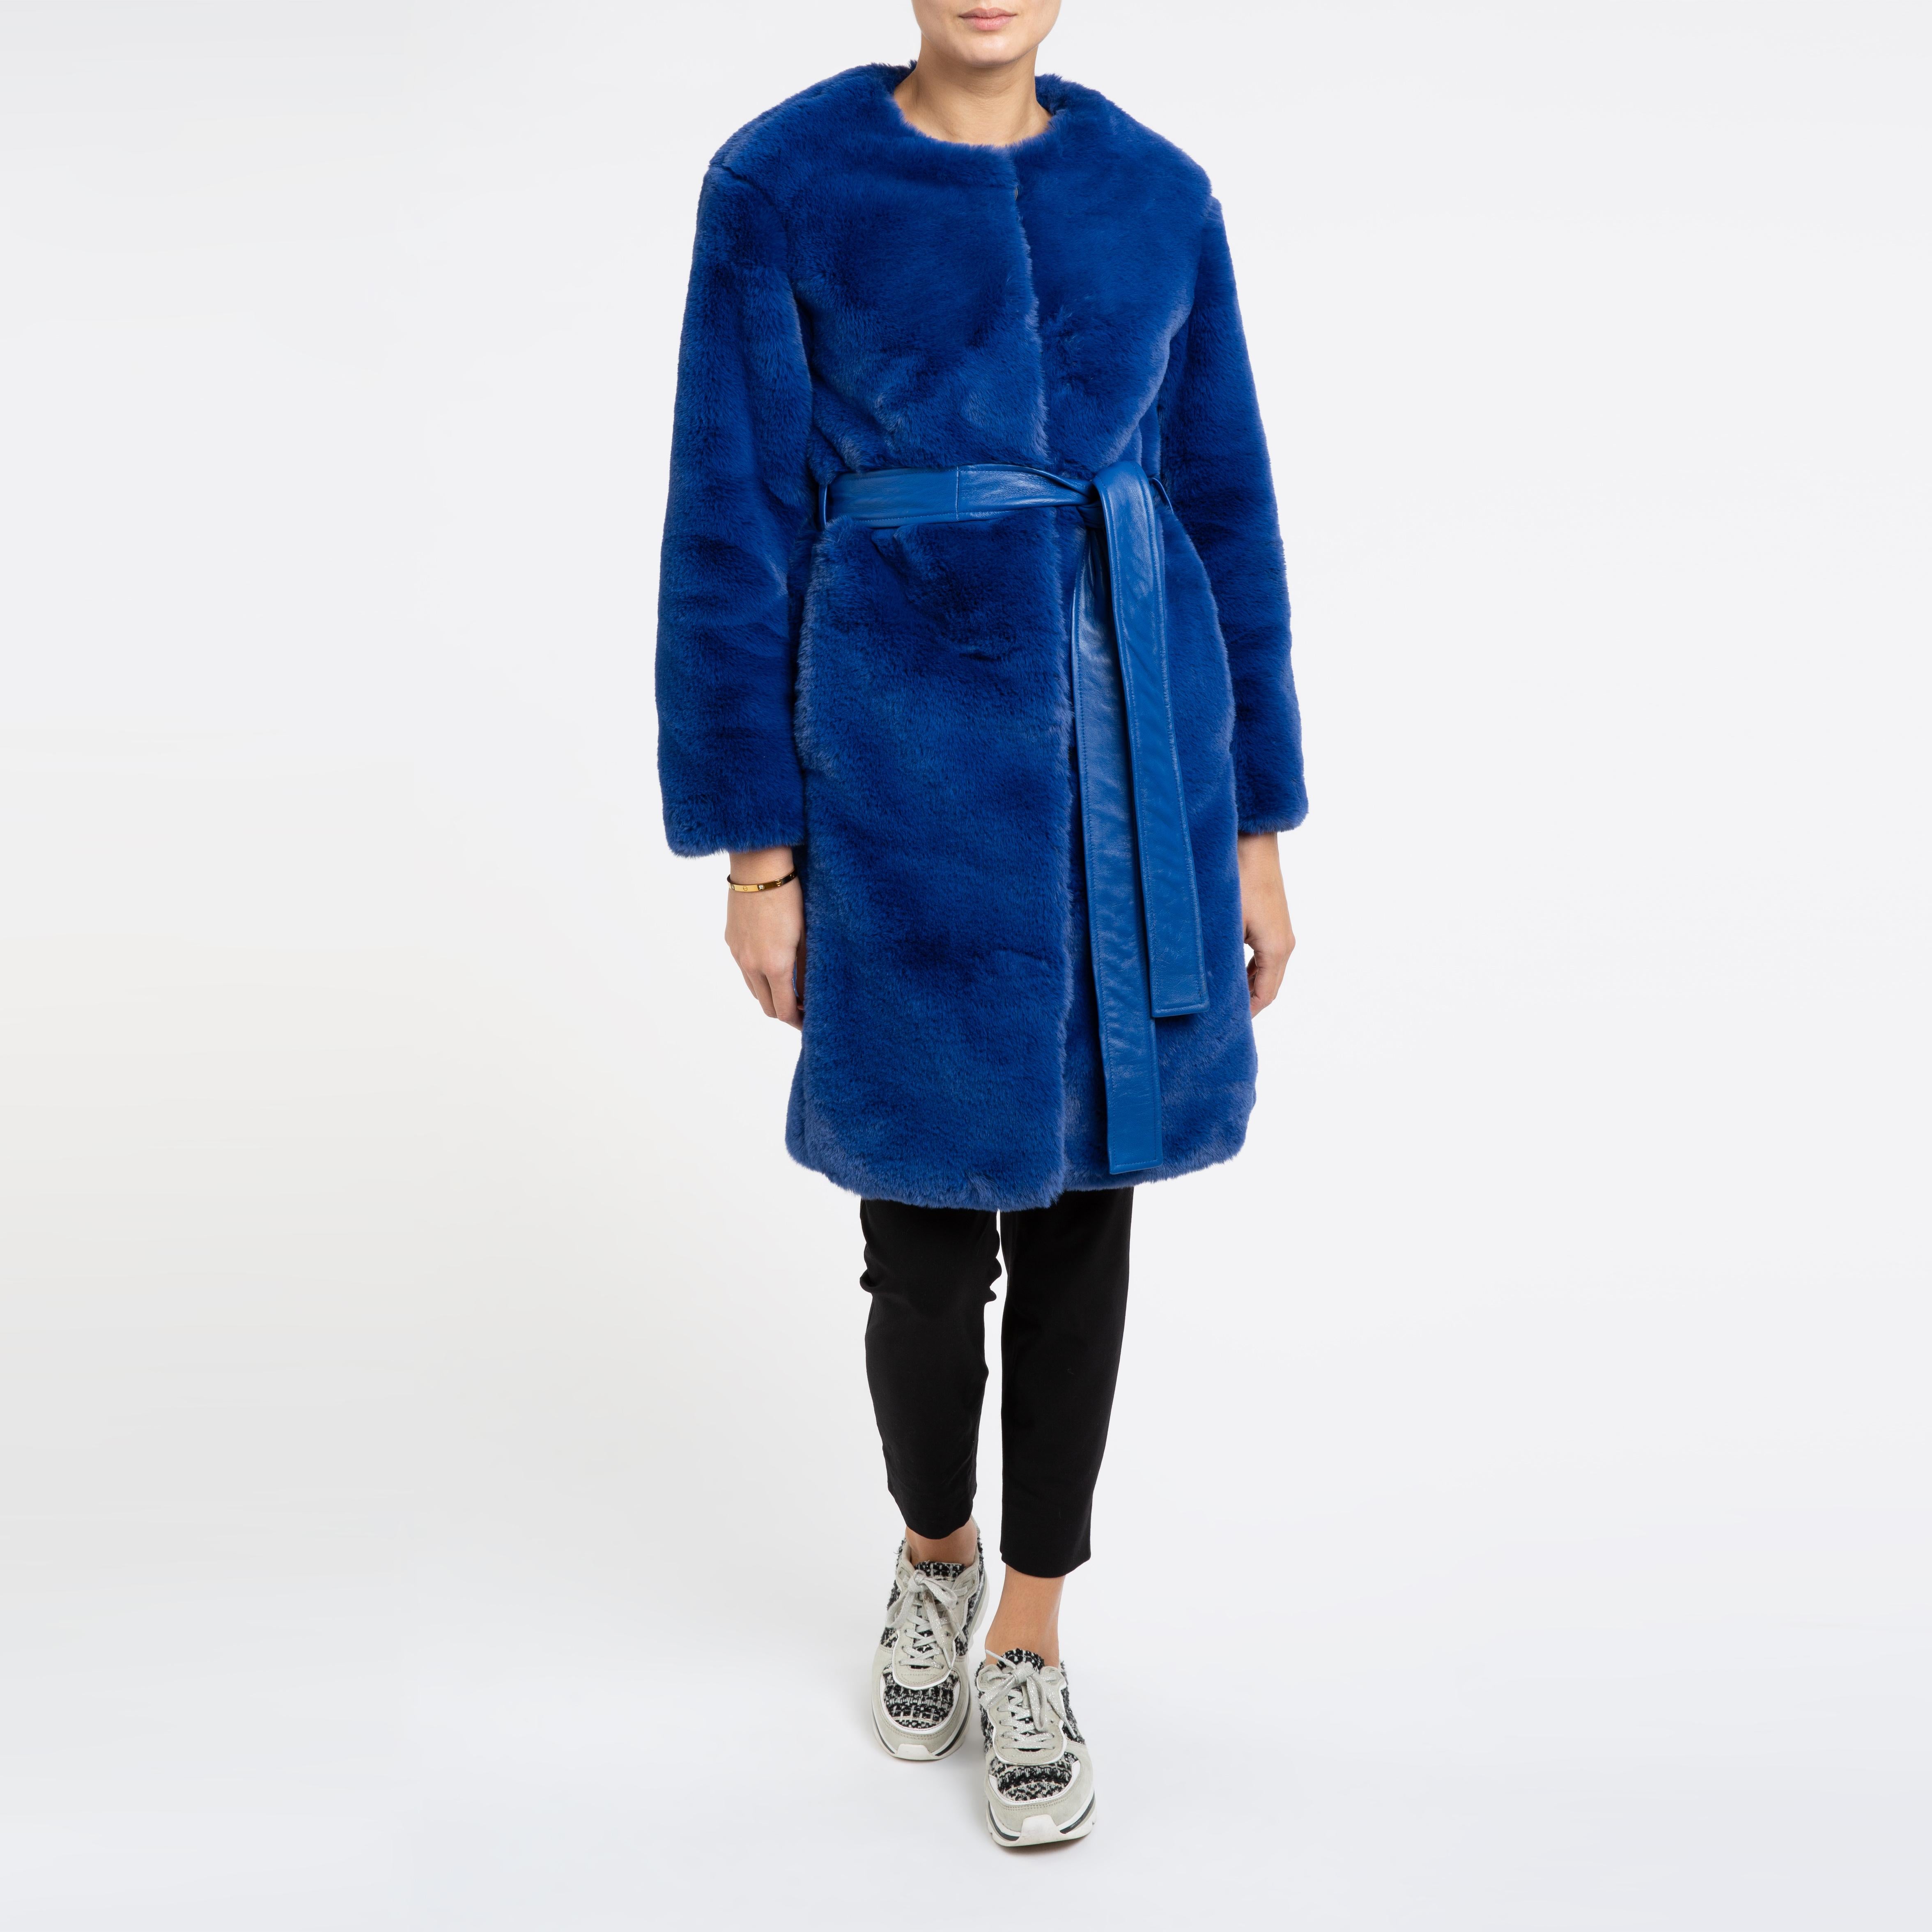 Verheyen London Serena  Collarless Faux Fur Coat in Blue - Size uk 12  For Sale 1